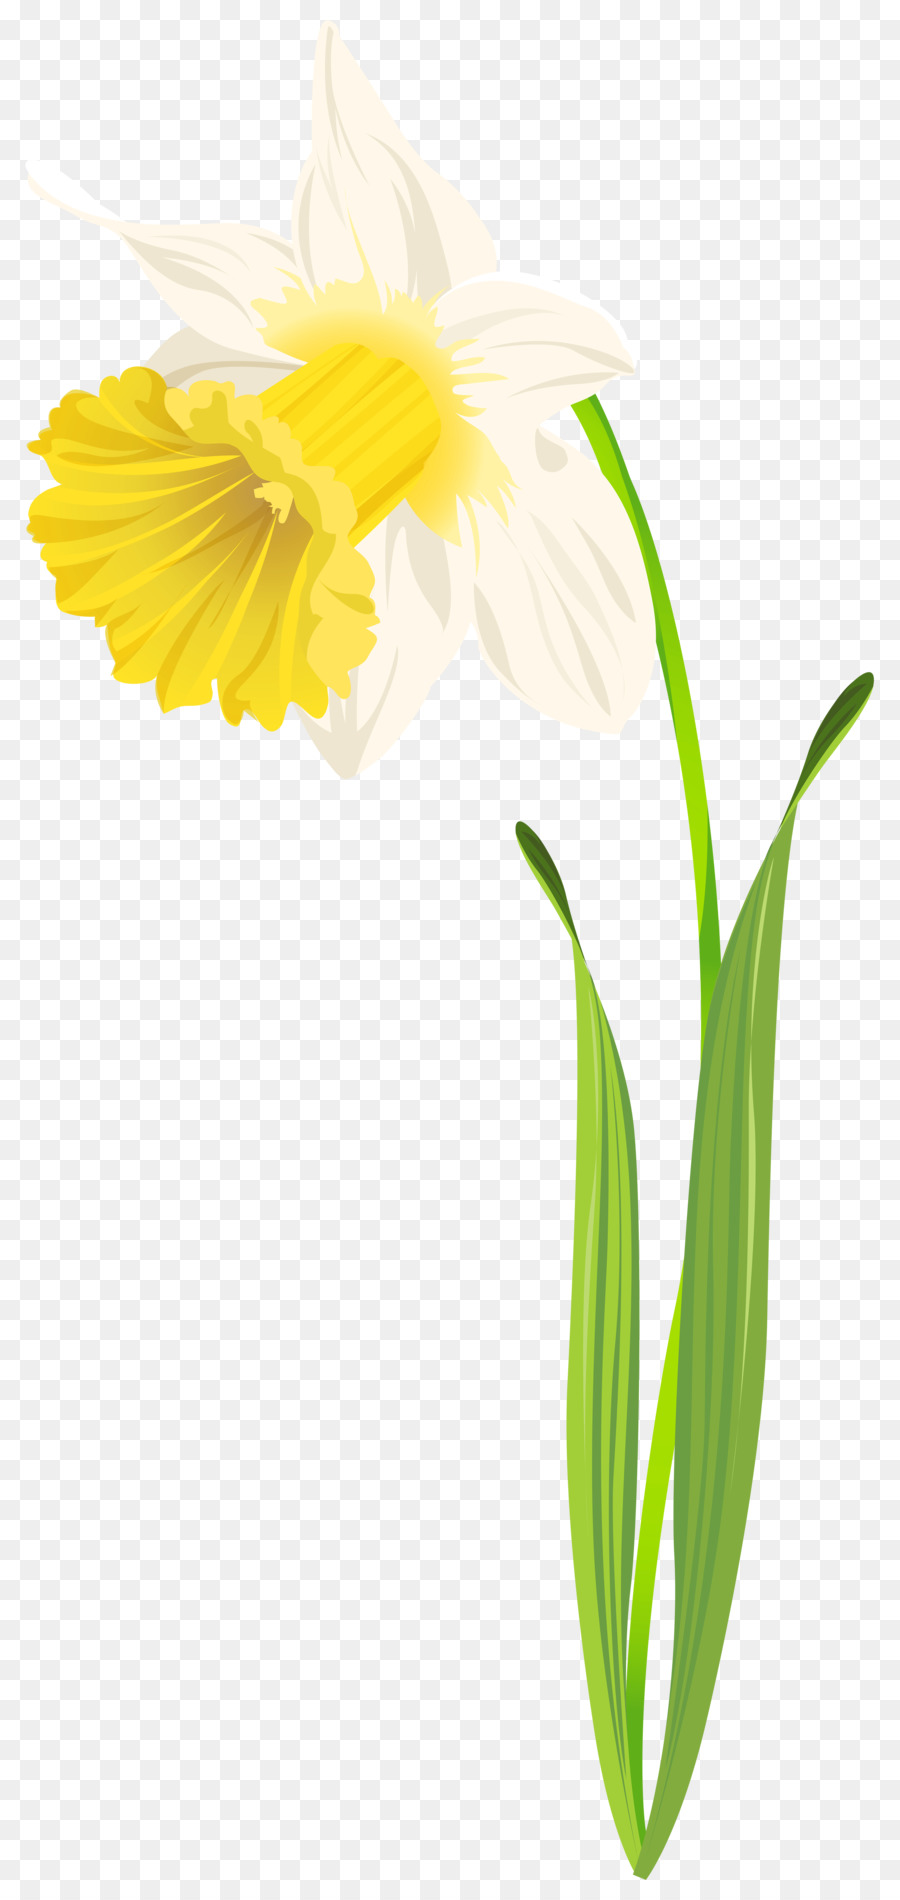 Daffodil Flower Clip art - grasshopper png download - 3817*8000 - Free Transparent Daffodil png Download.